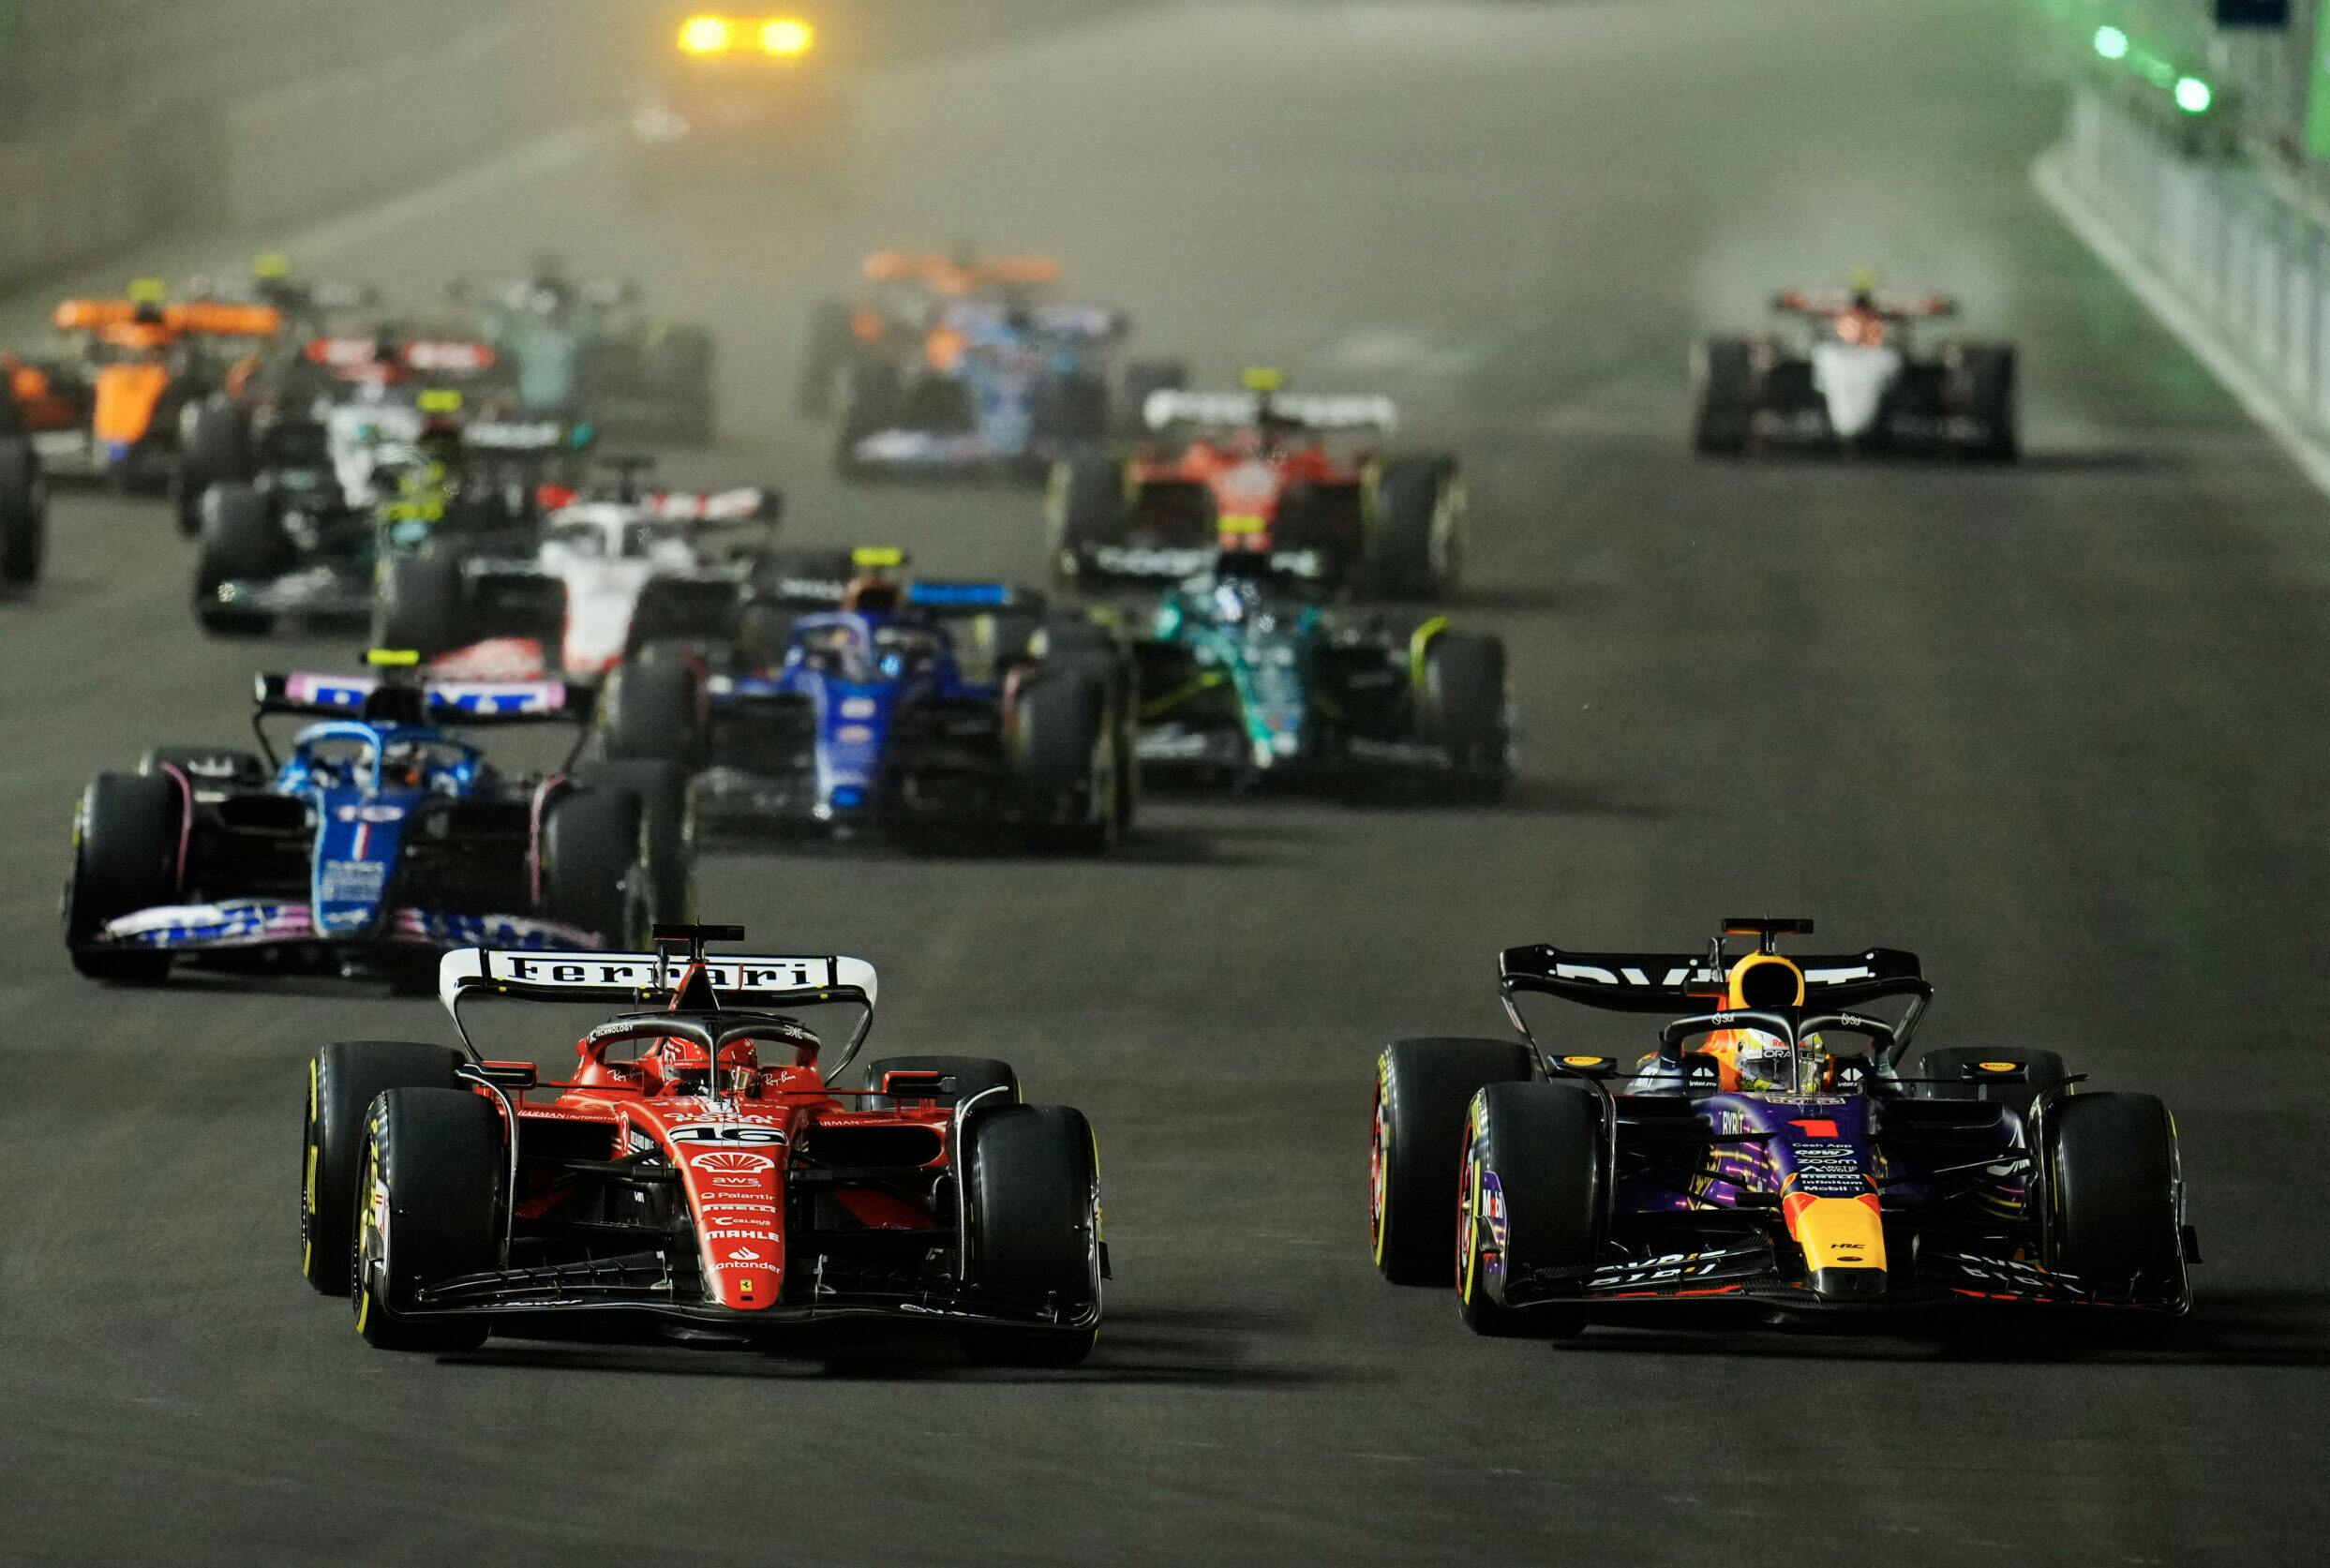 F1 22 Celebrates the United States Grand Prix with Free Content